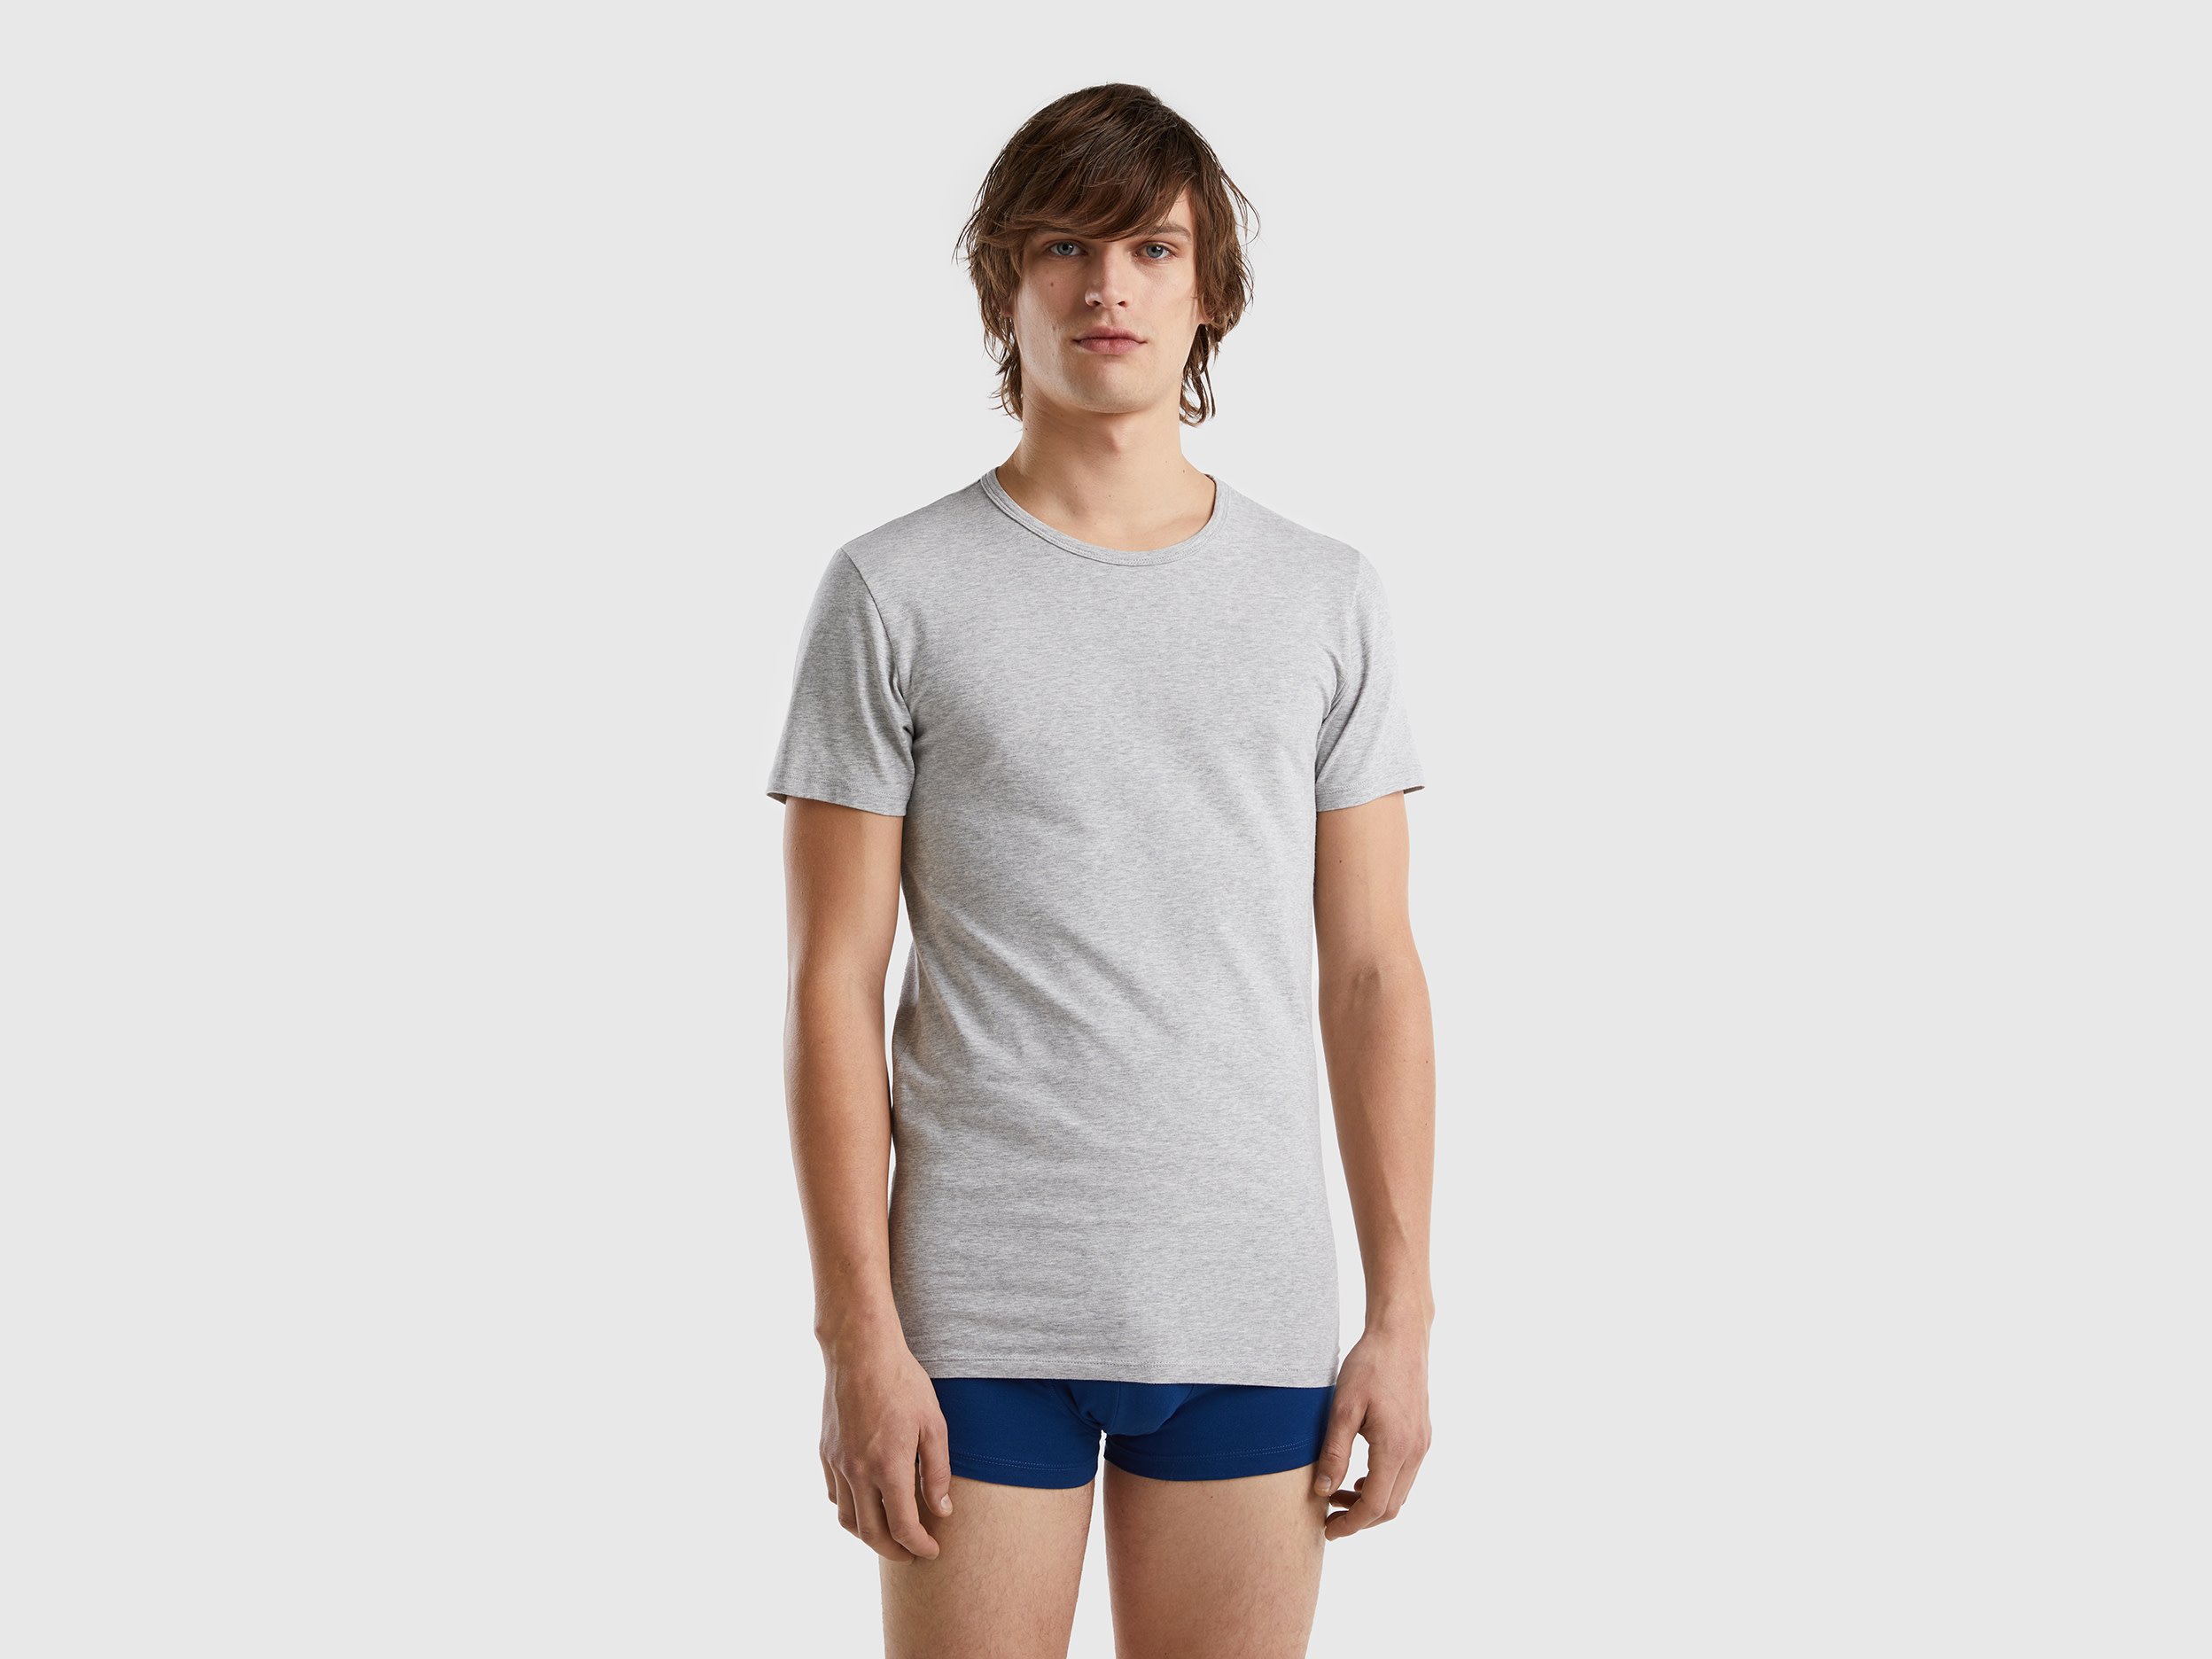 Benetton, Organic Stretch Cotton T-shirt, size XXL, Light Gray, Men